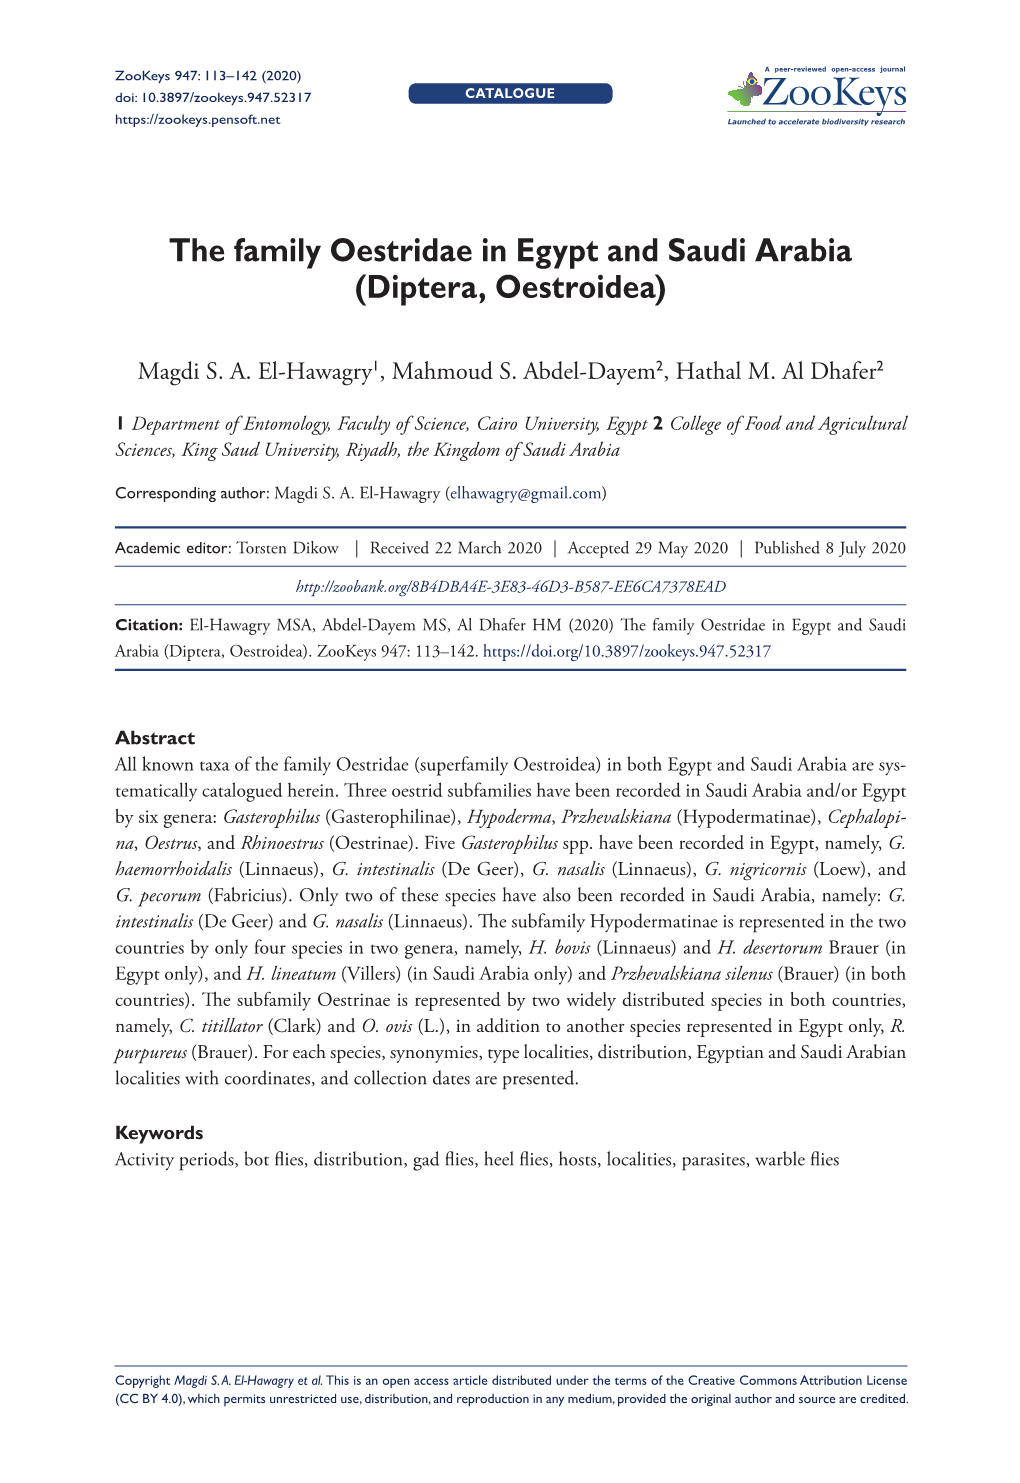 The Family Oestridae in Egypt and Saudi Arabia (Diptera, Oestroidea)